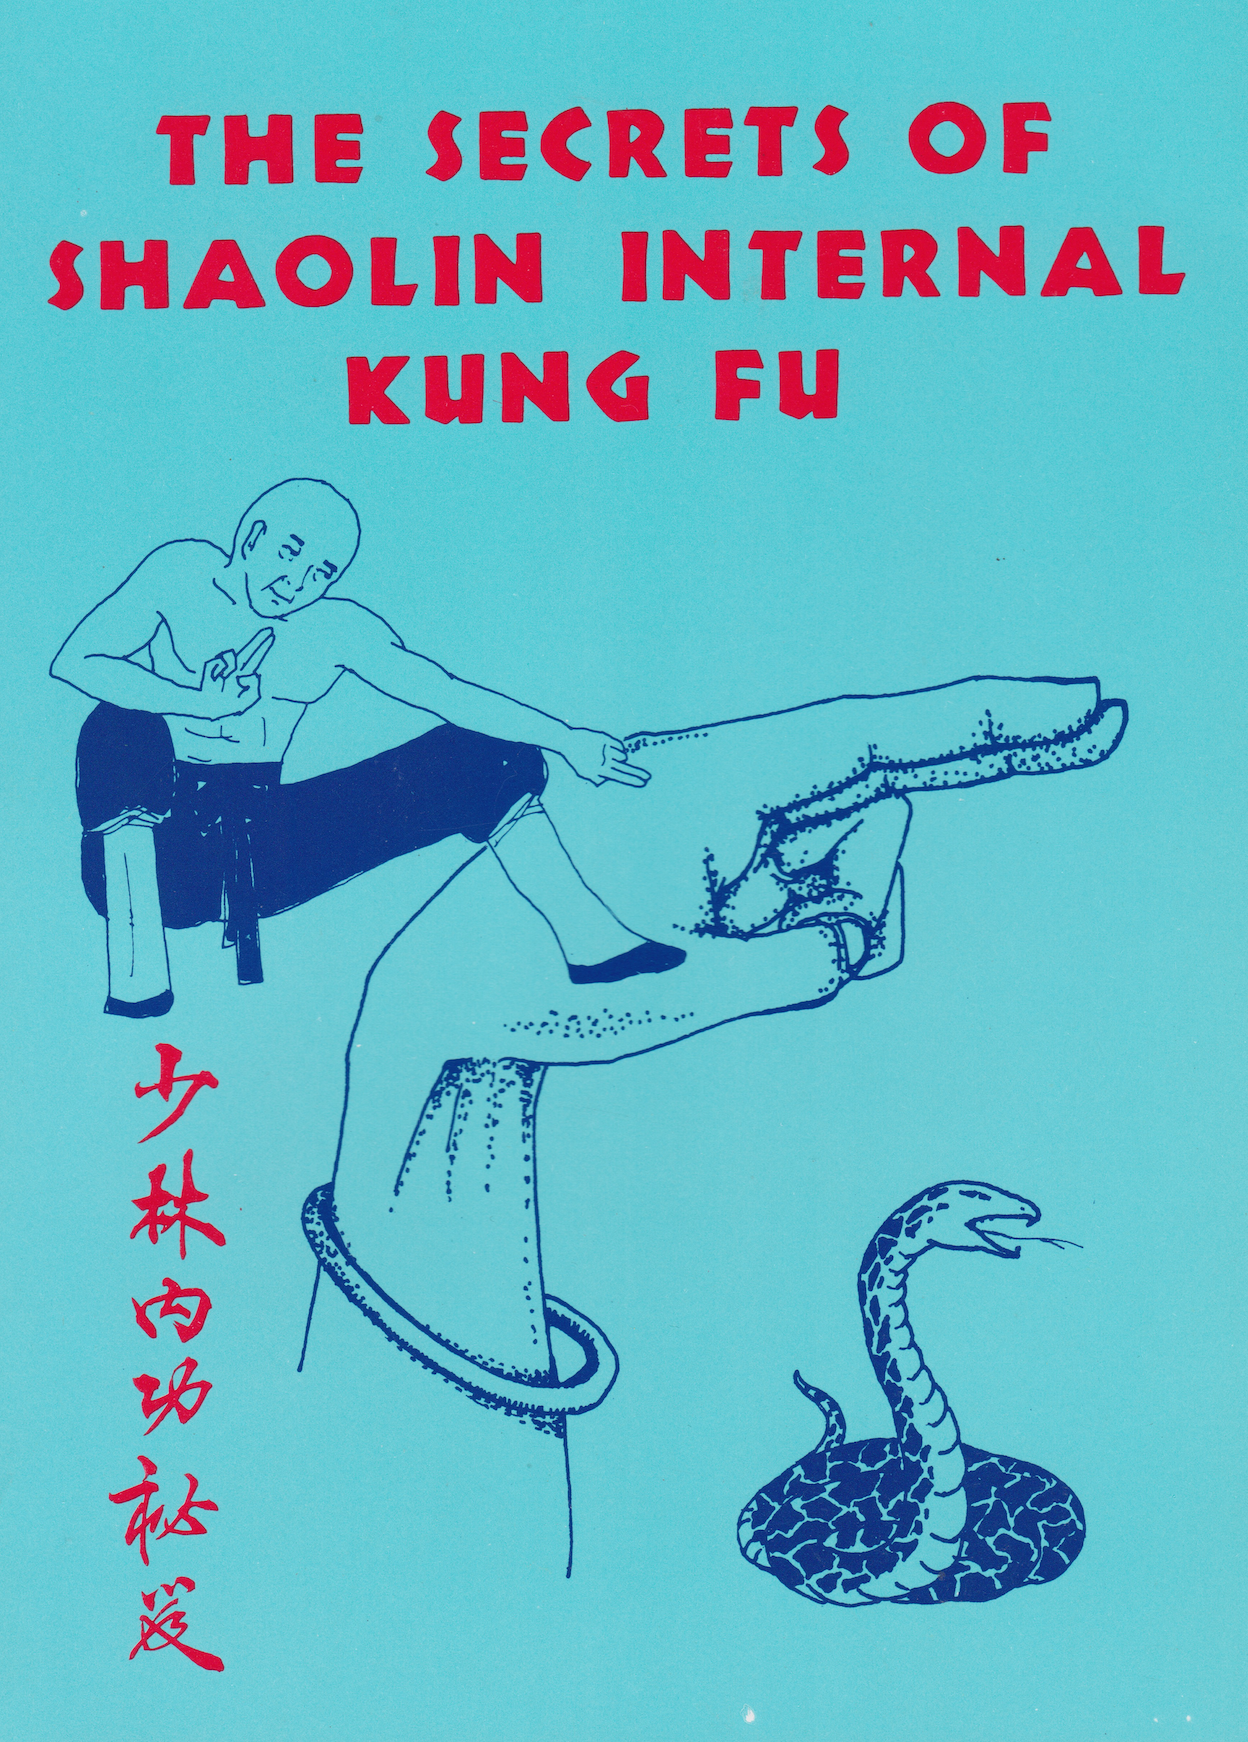 Libro Secretos del Kung Fu Interno de Shaolin por HC Chao